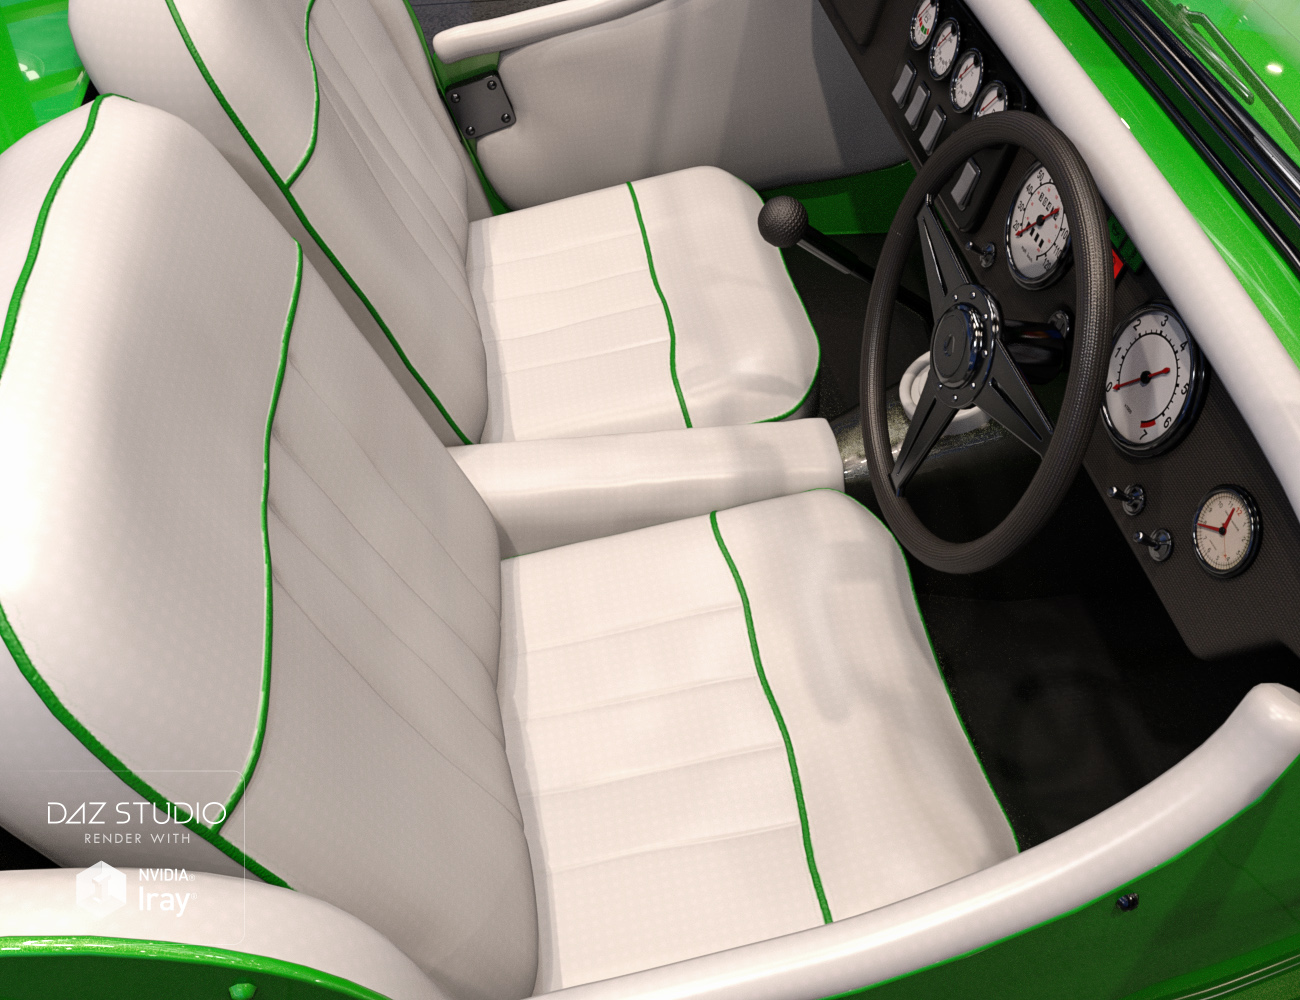 Sports Car Morris Showcar Iray by: Dumor3D, 3D Models by Daz 3D